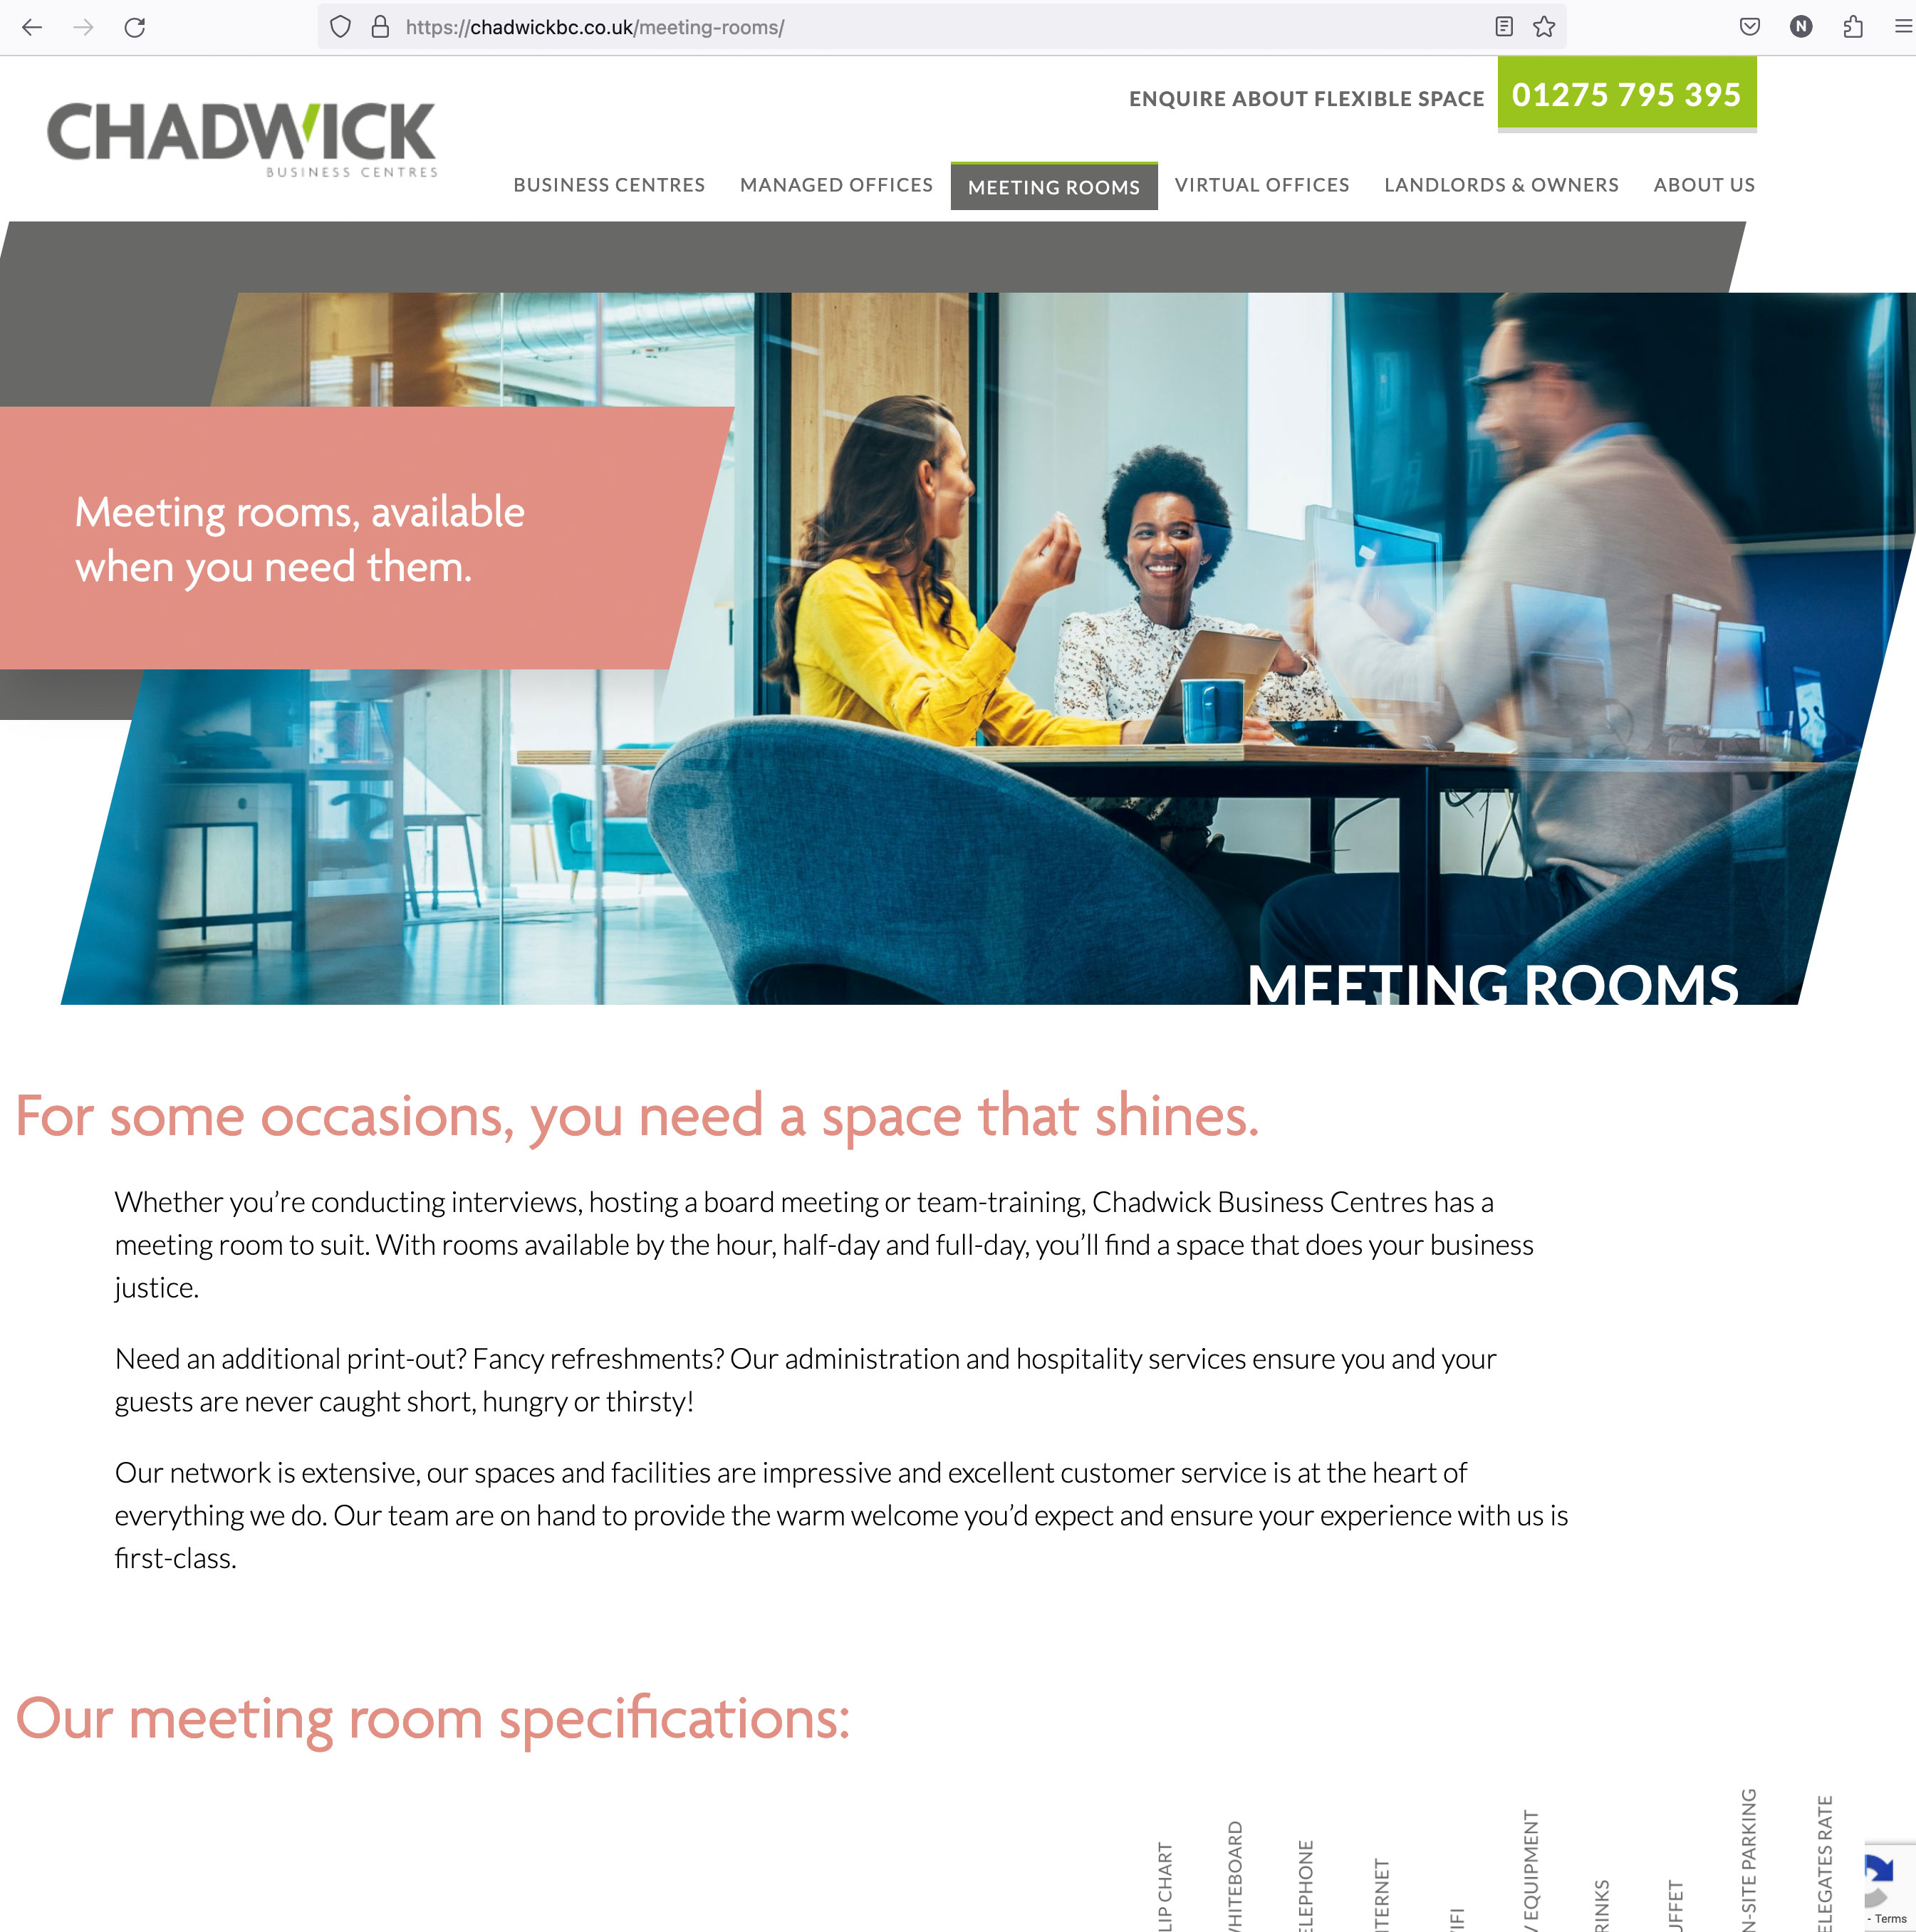 Chadwickbc-4.jpg